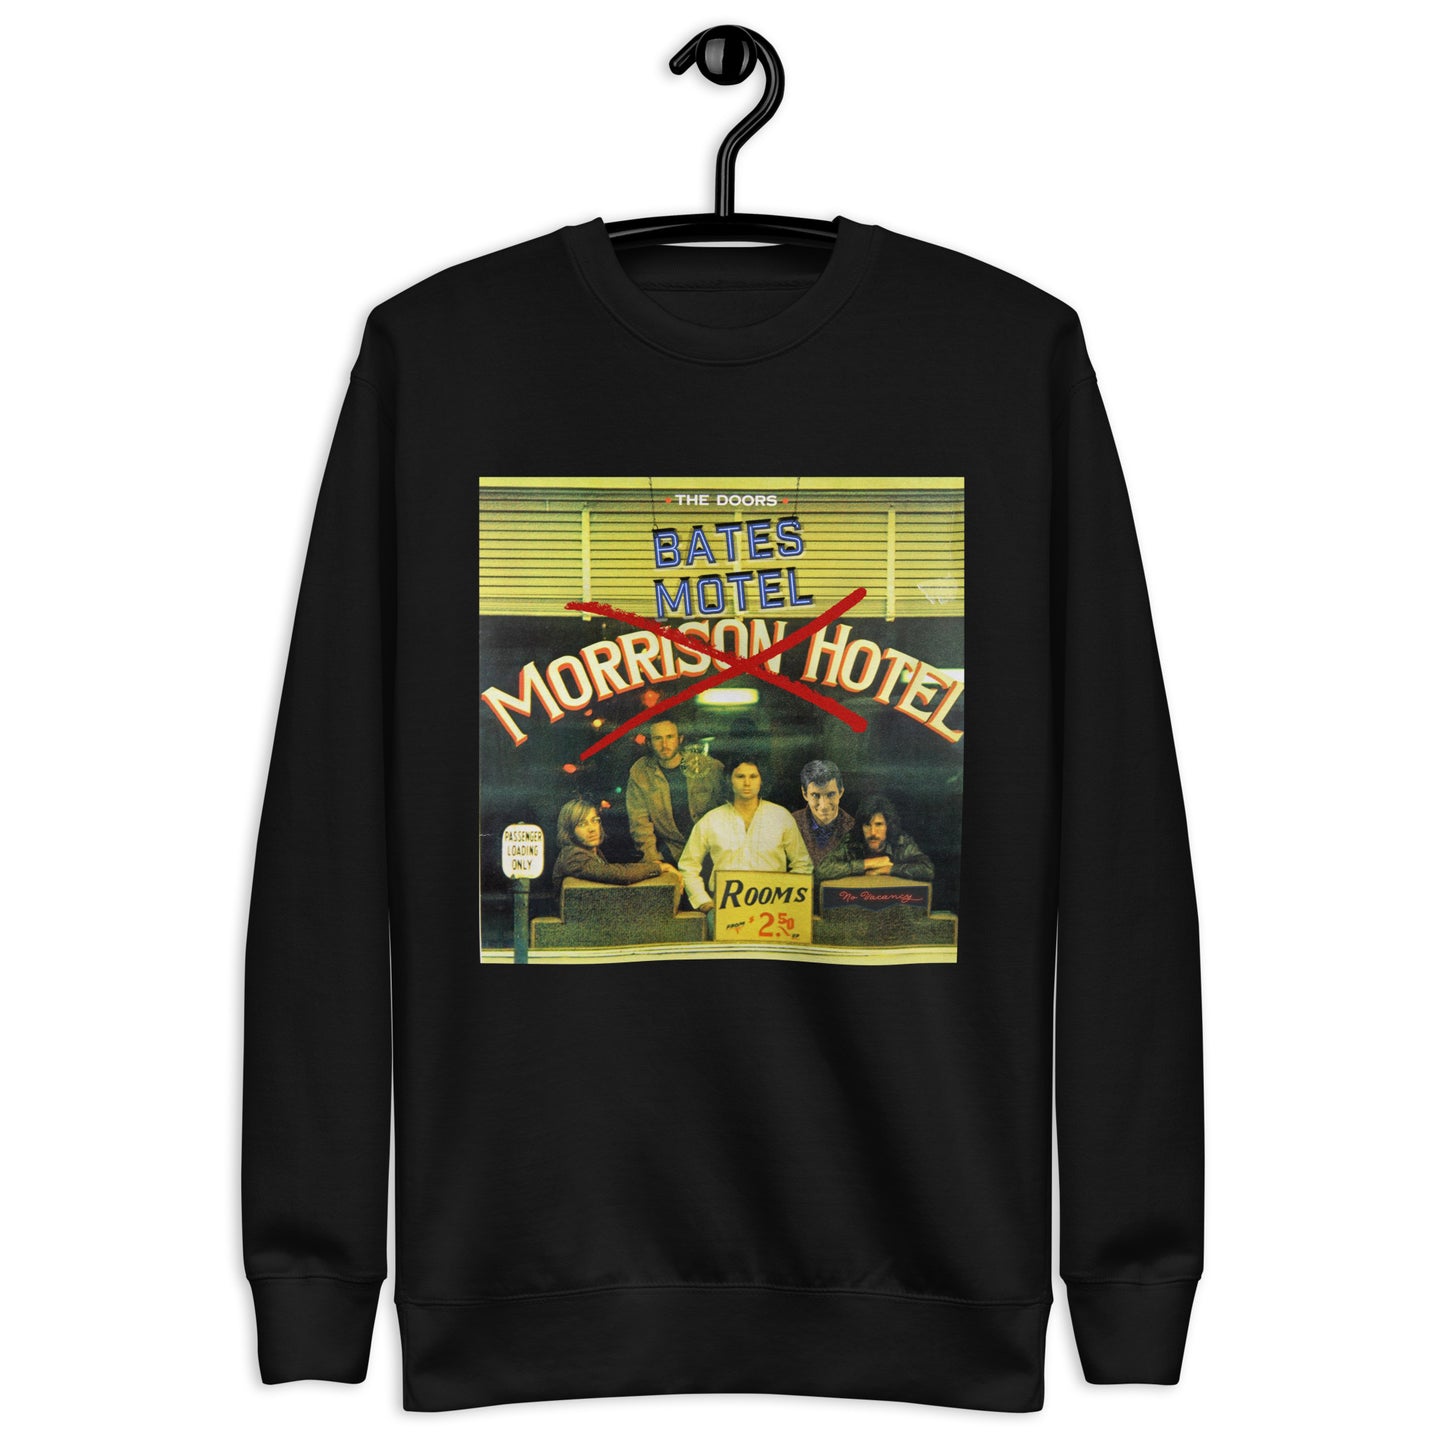 The Doors Bates Motel KiSS Unisex Premium Sweatshirt - Jim Morrison music psycho